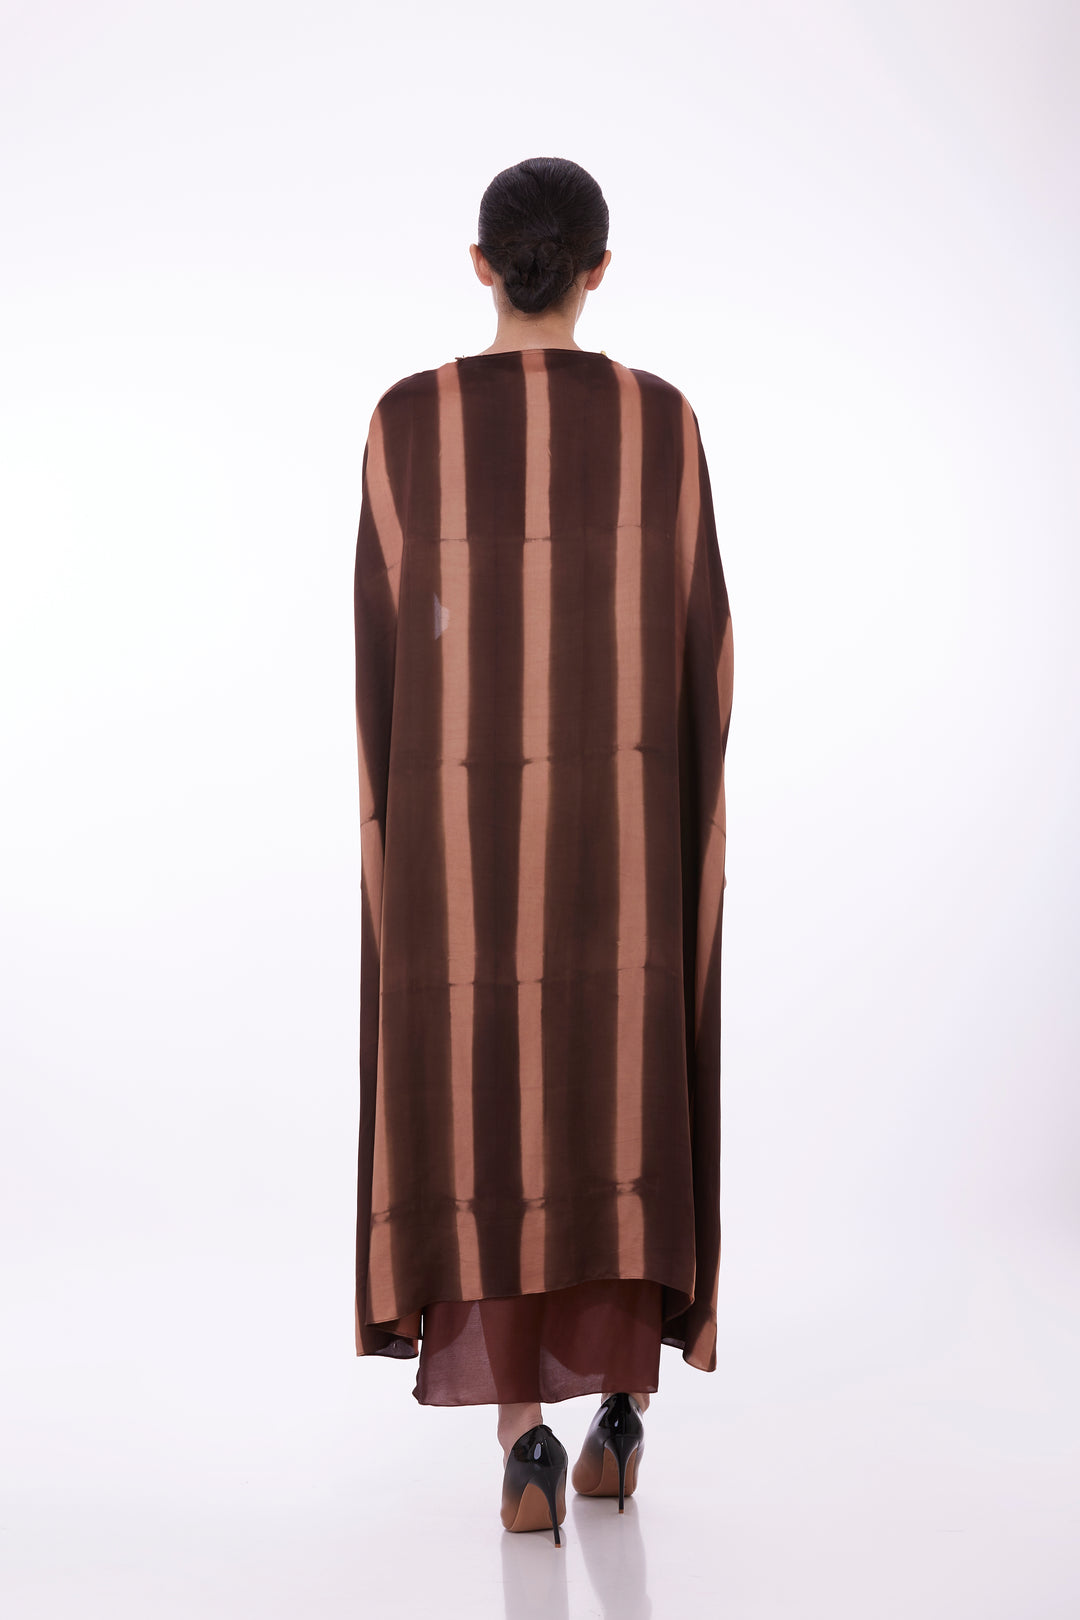 Brown tye dye embellished cape, emb top & draped shoot skirt with high slit skirt